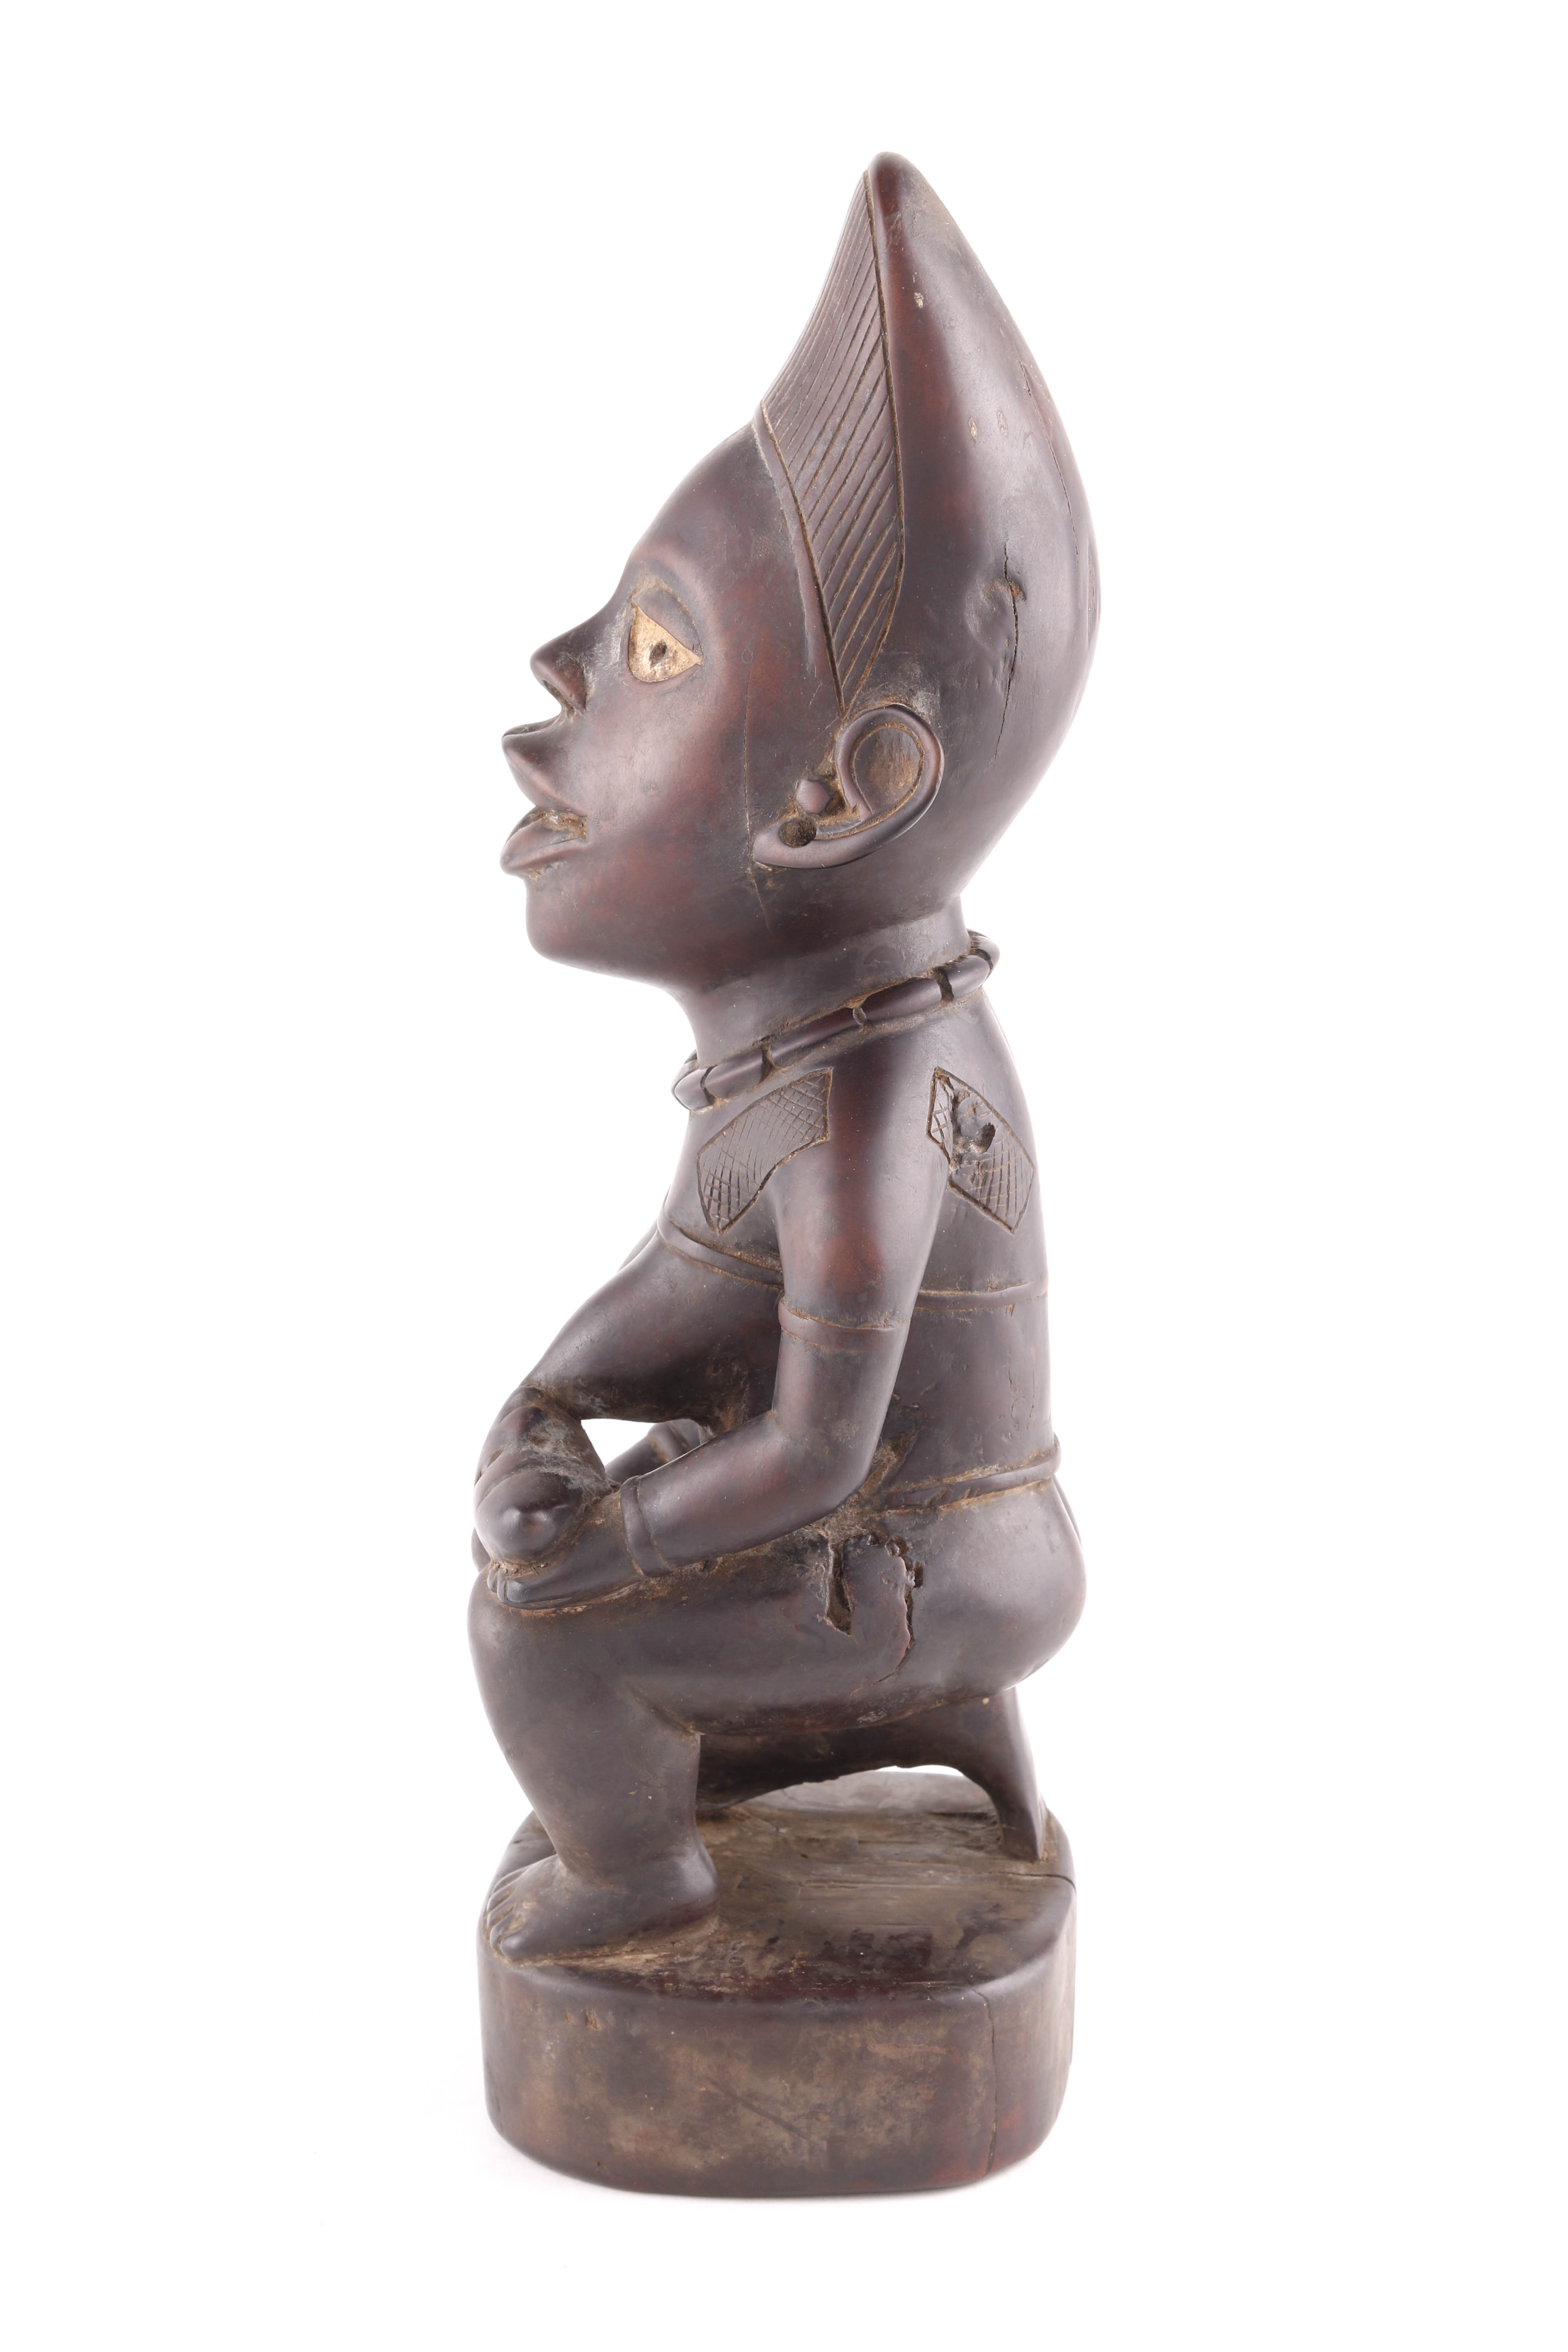 Figura de Maternidade, Yombe, República Democrática do Congo